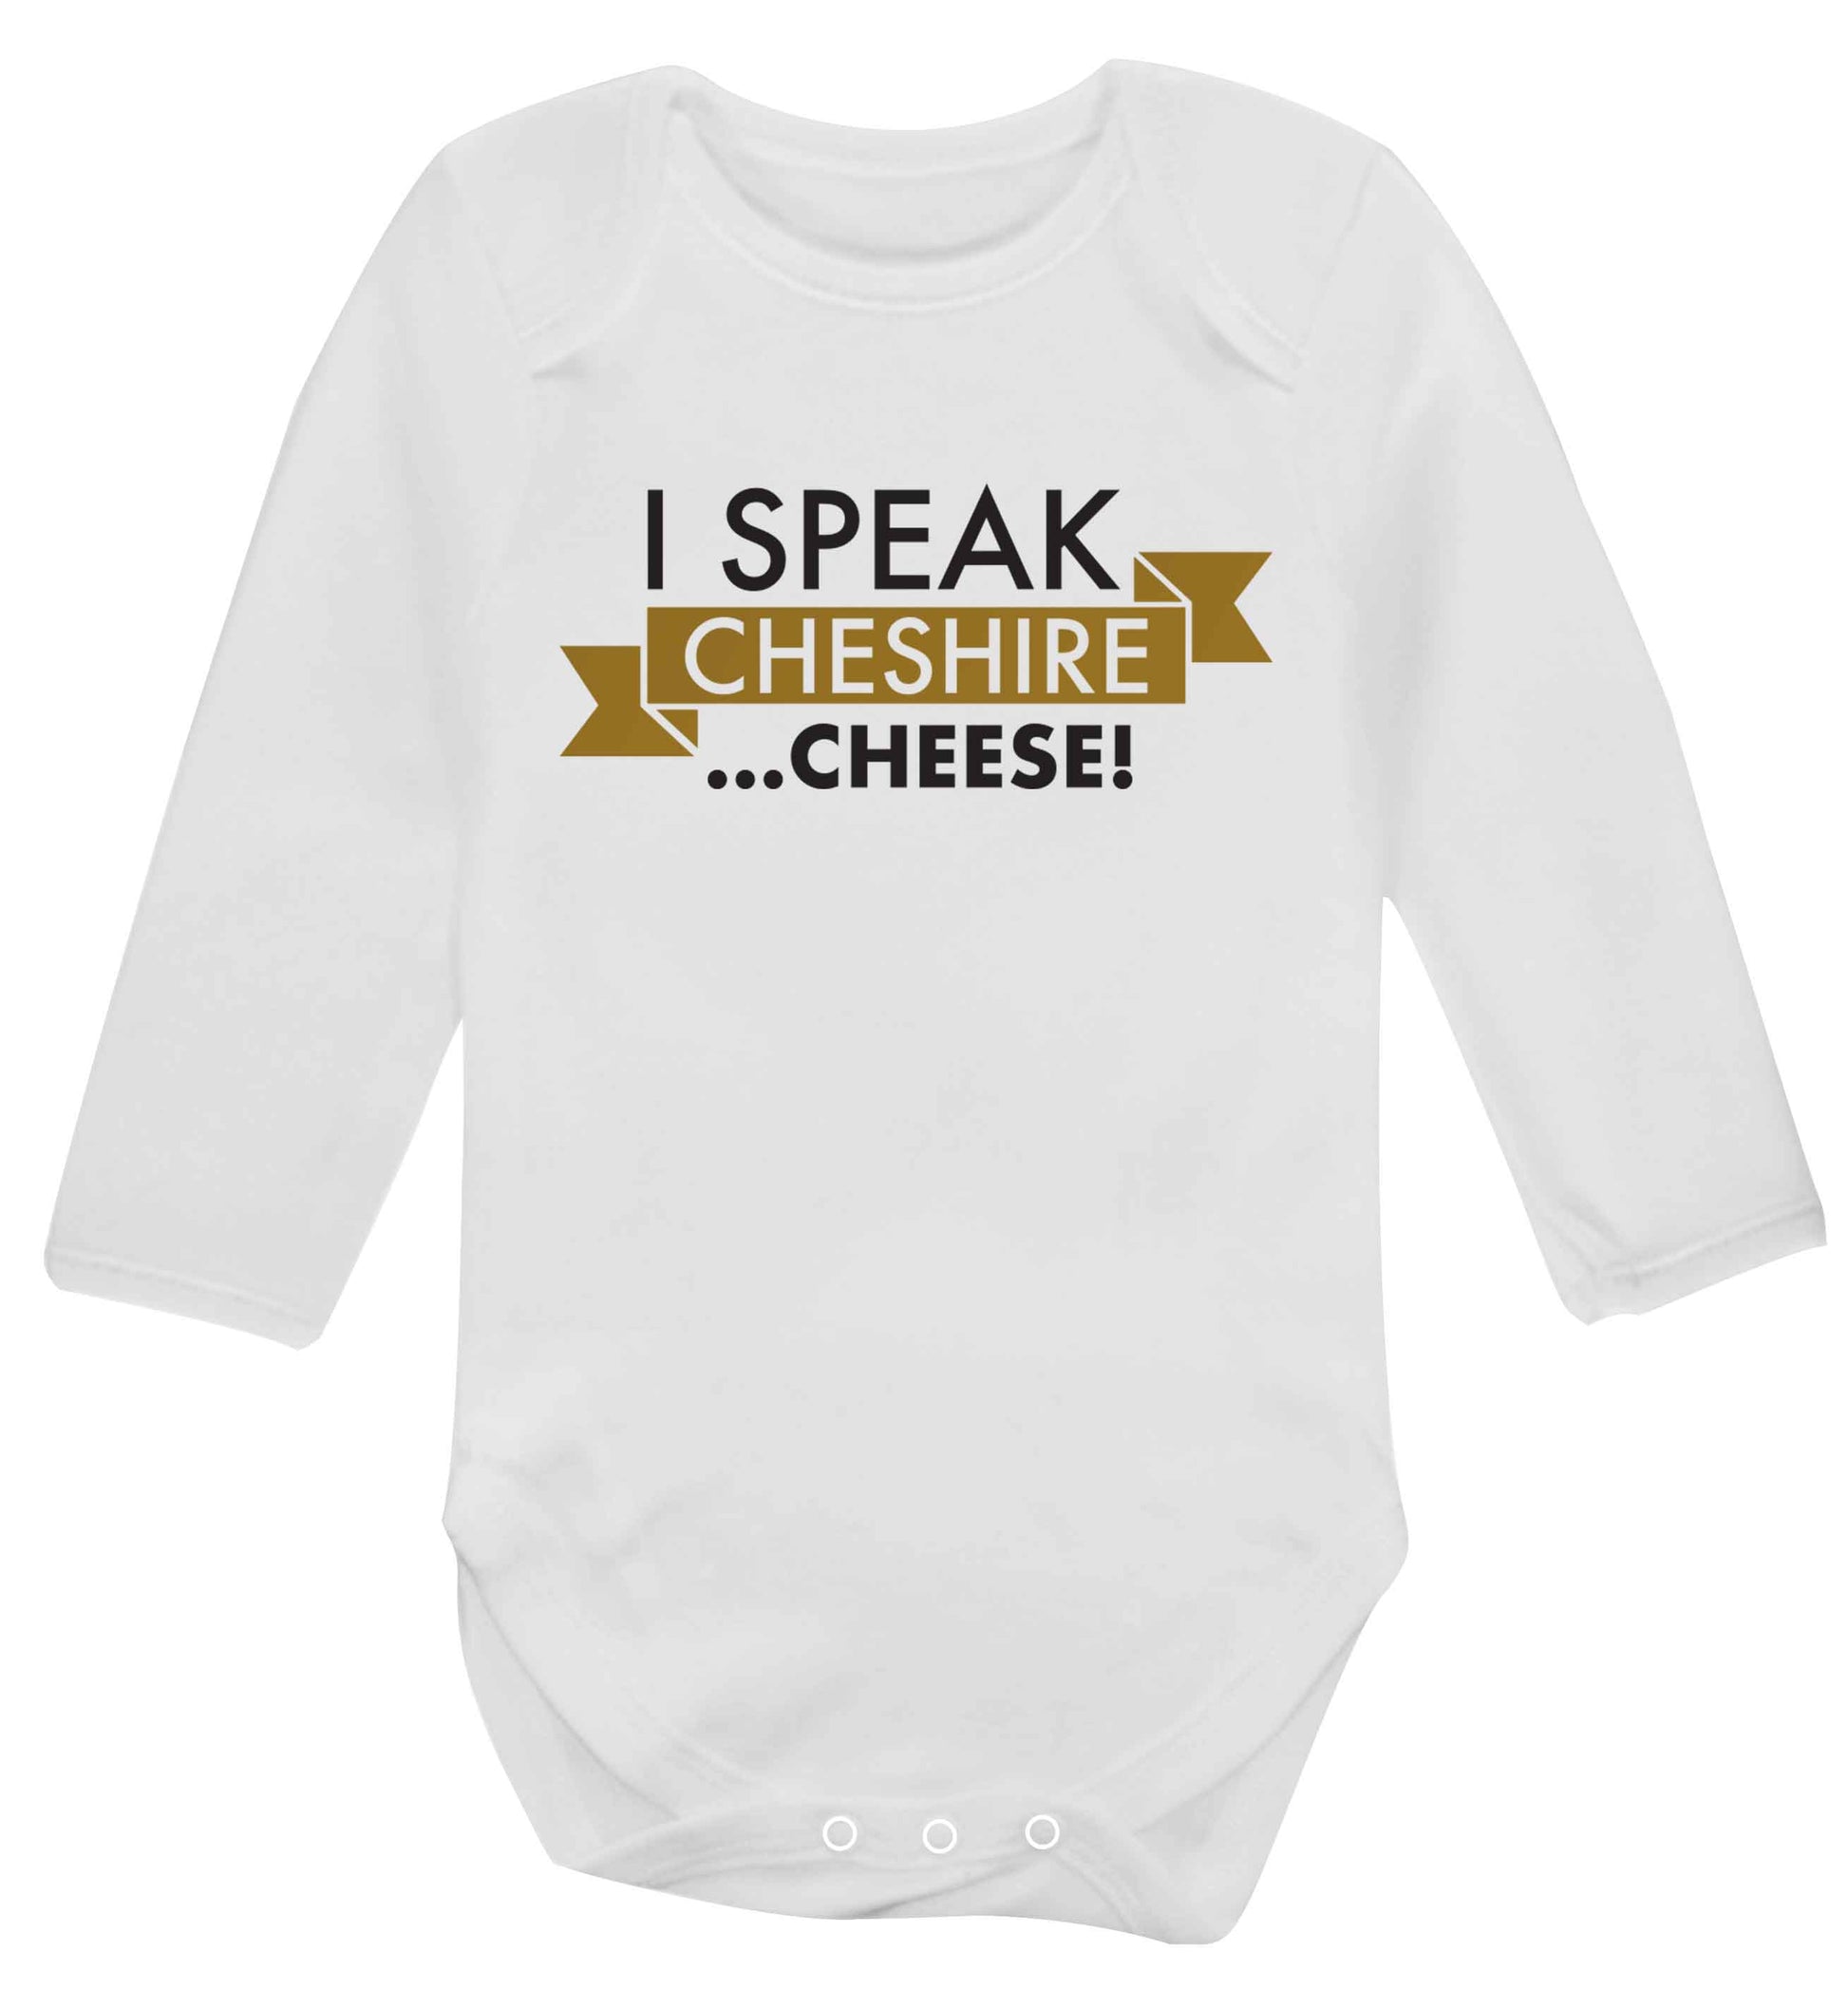 I speak Cheshire cheese Baby Vest long sleeved white 6-12 months